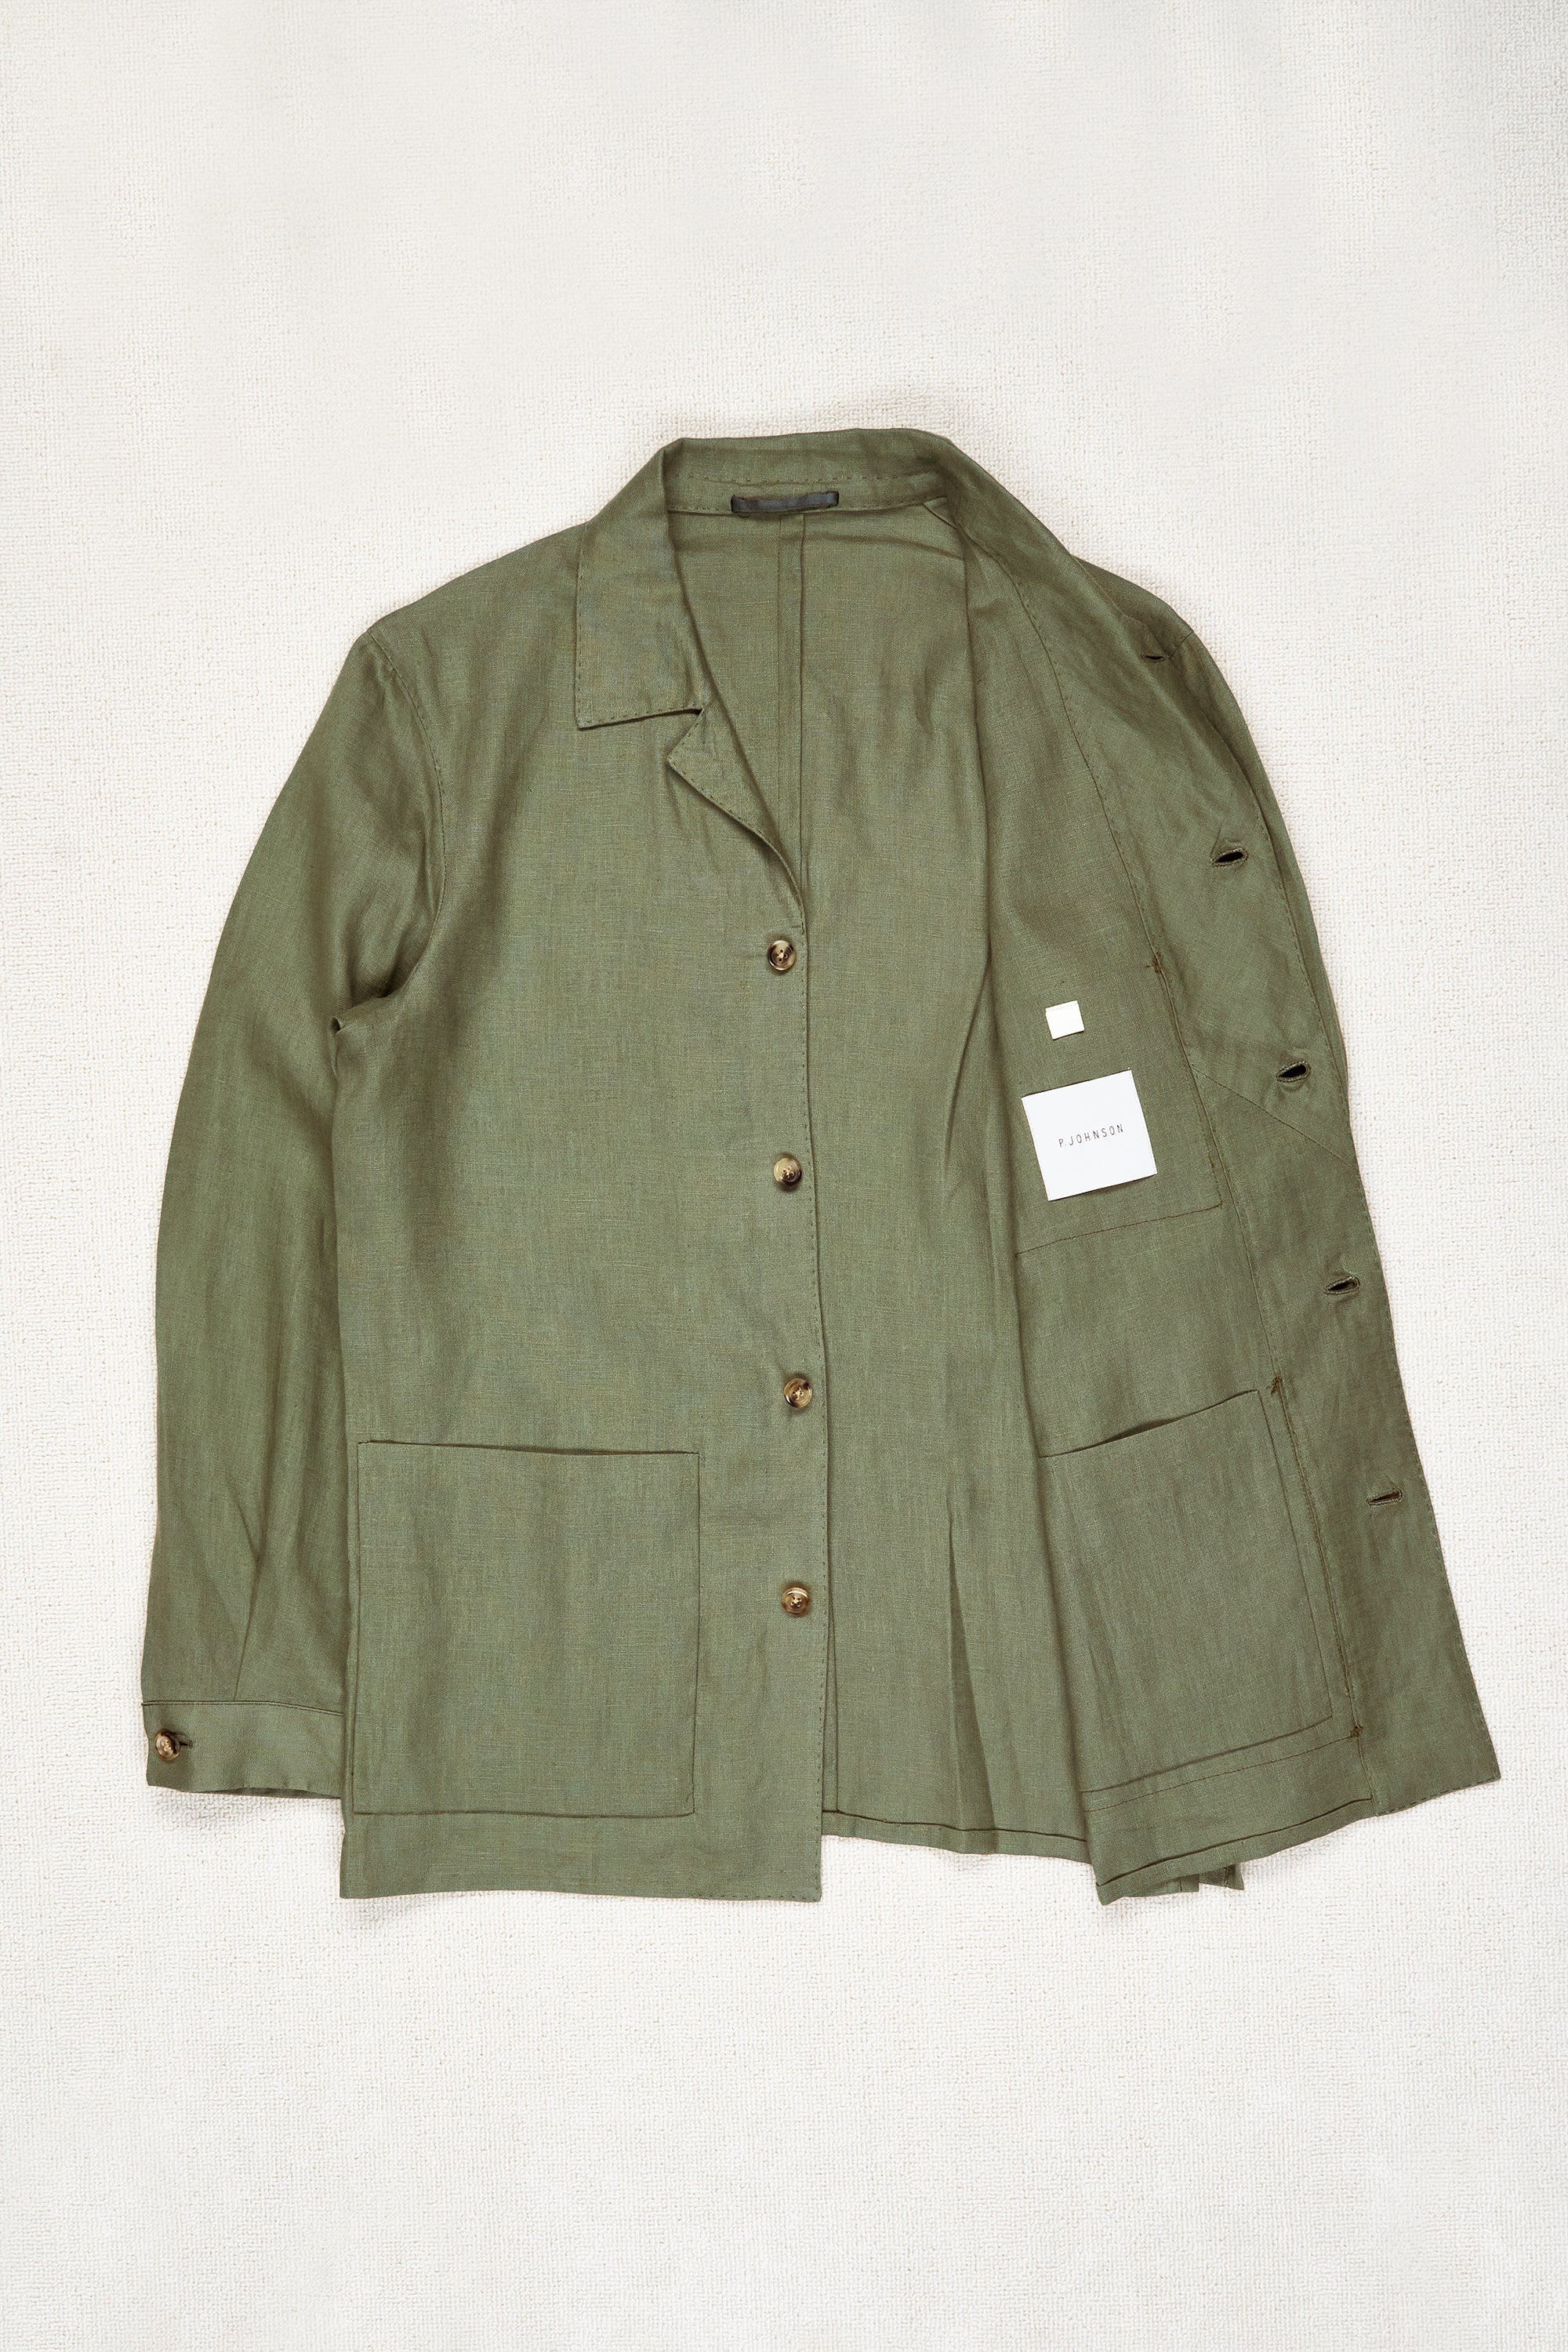 P. Johnson Army Green Linen Shirt Jacket